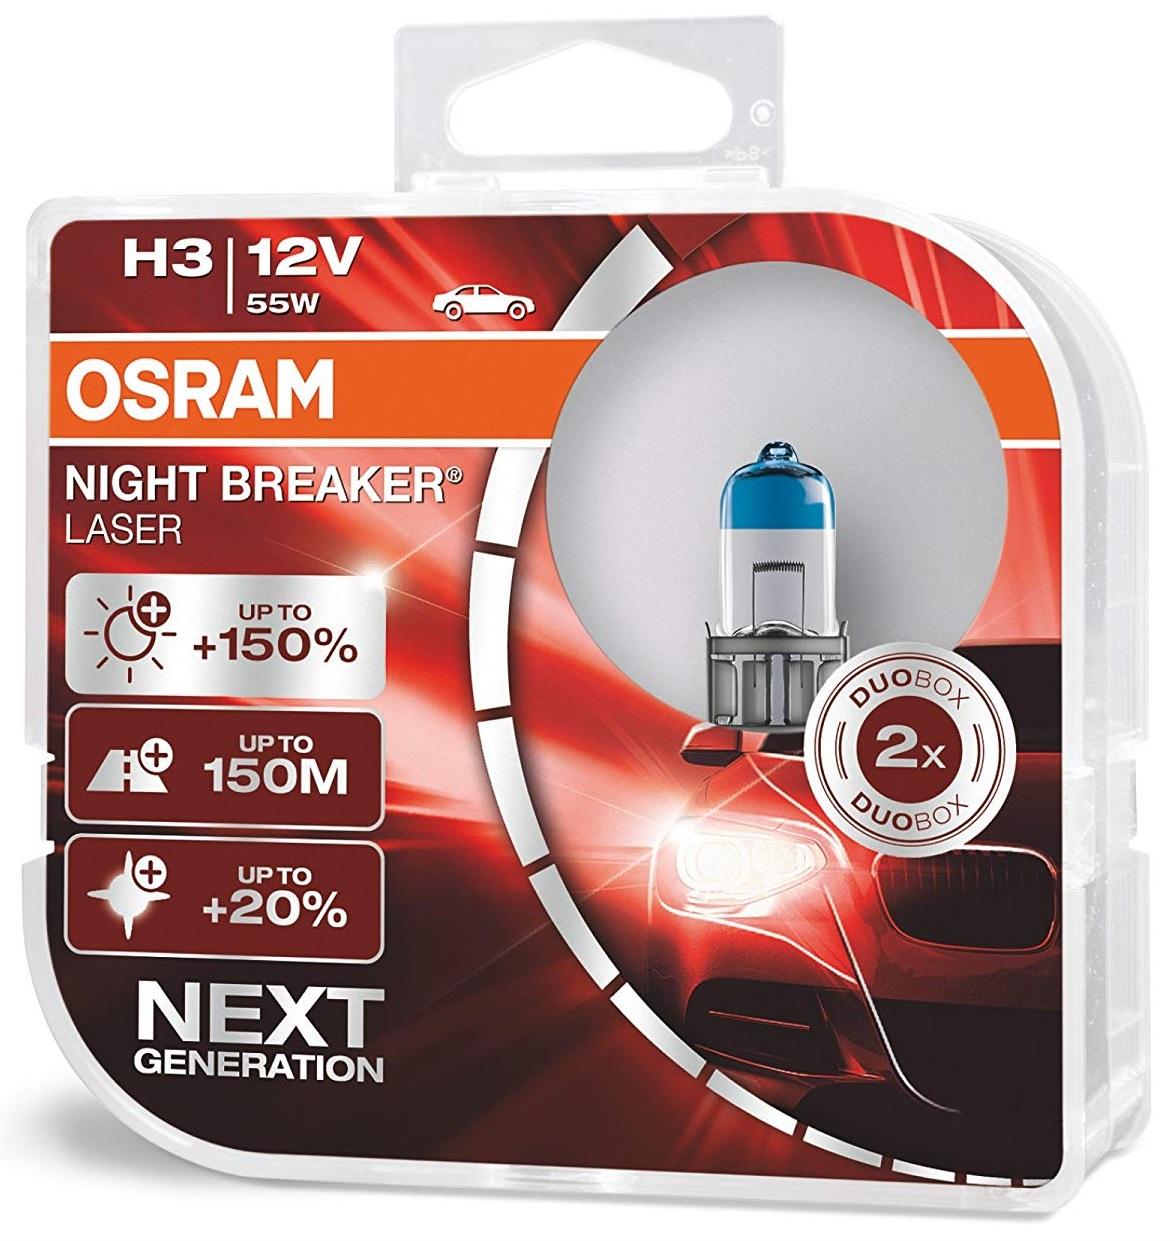 Lampade OSRAM H3 NIGHT BREAKER® LASER Duo Box +150%